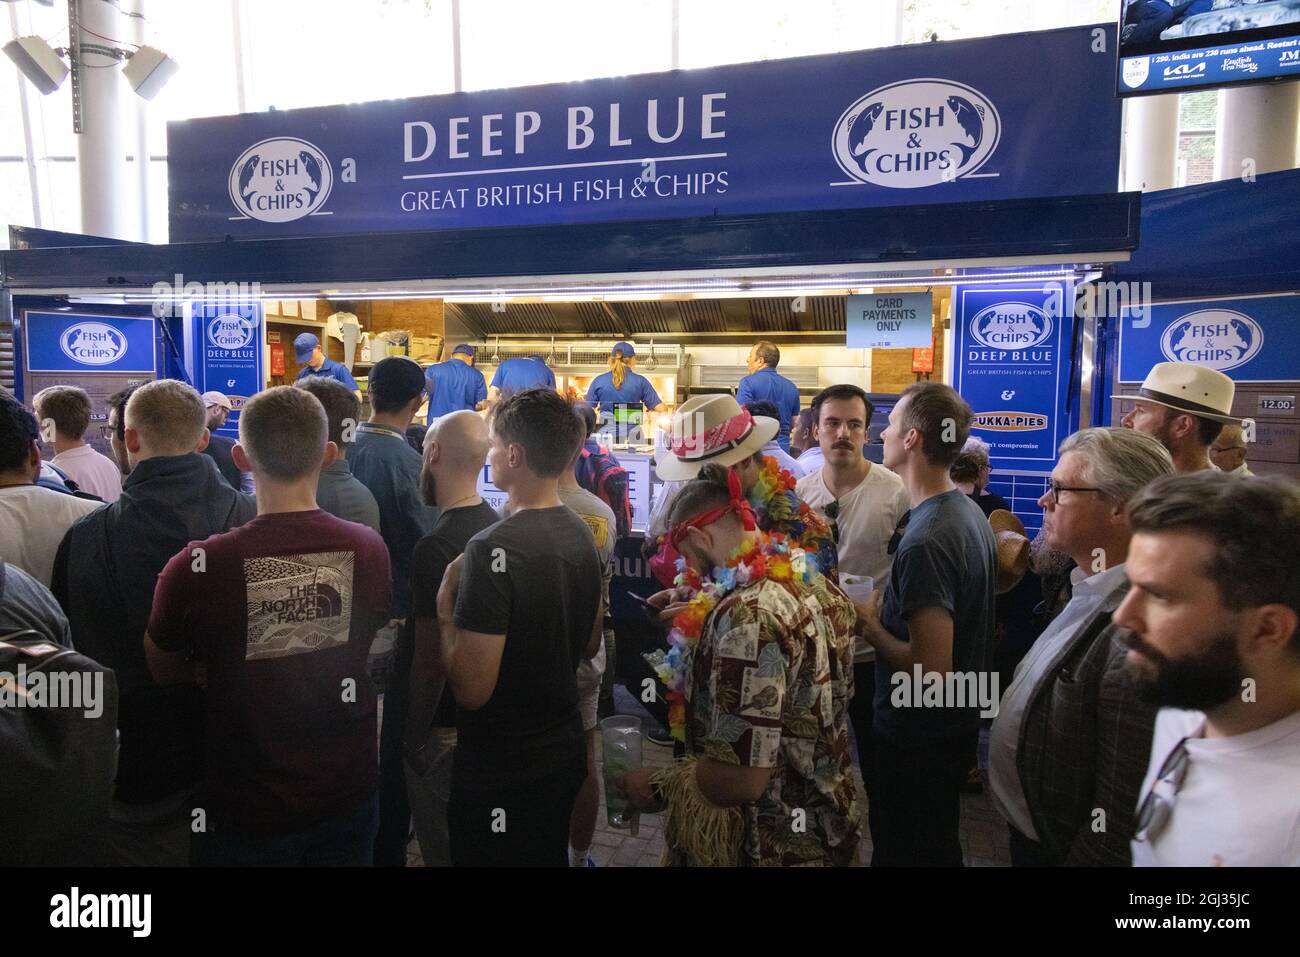 Deep Blue Fish & Chips stall at the Oval, Kennington London, servant des Fish and Chips à une foule de gens, Londres UK Banque D'Images